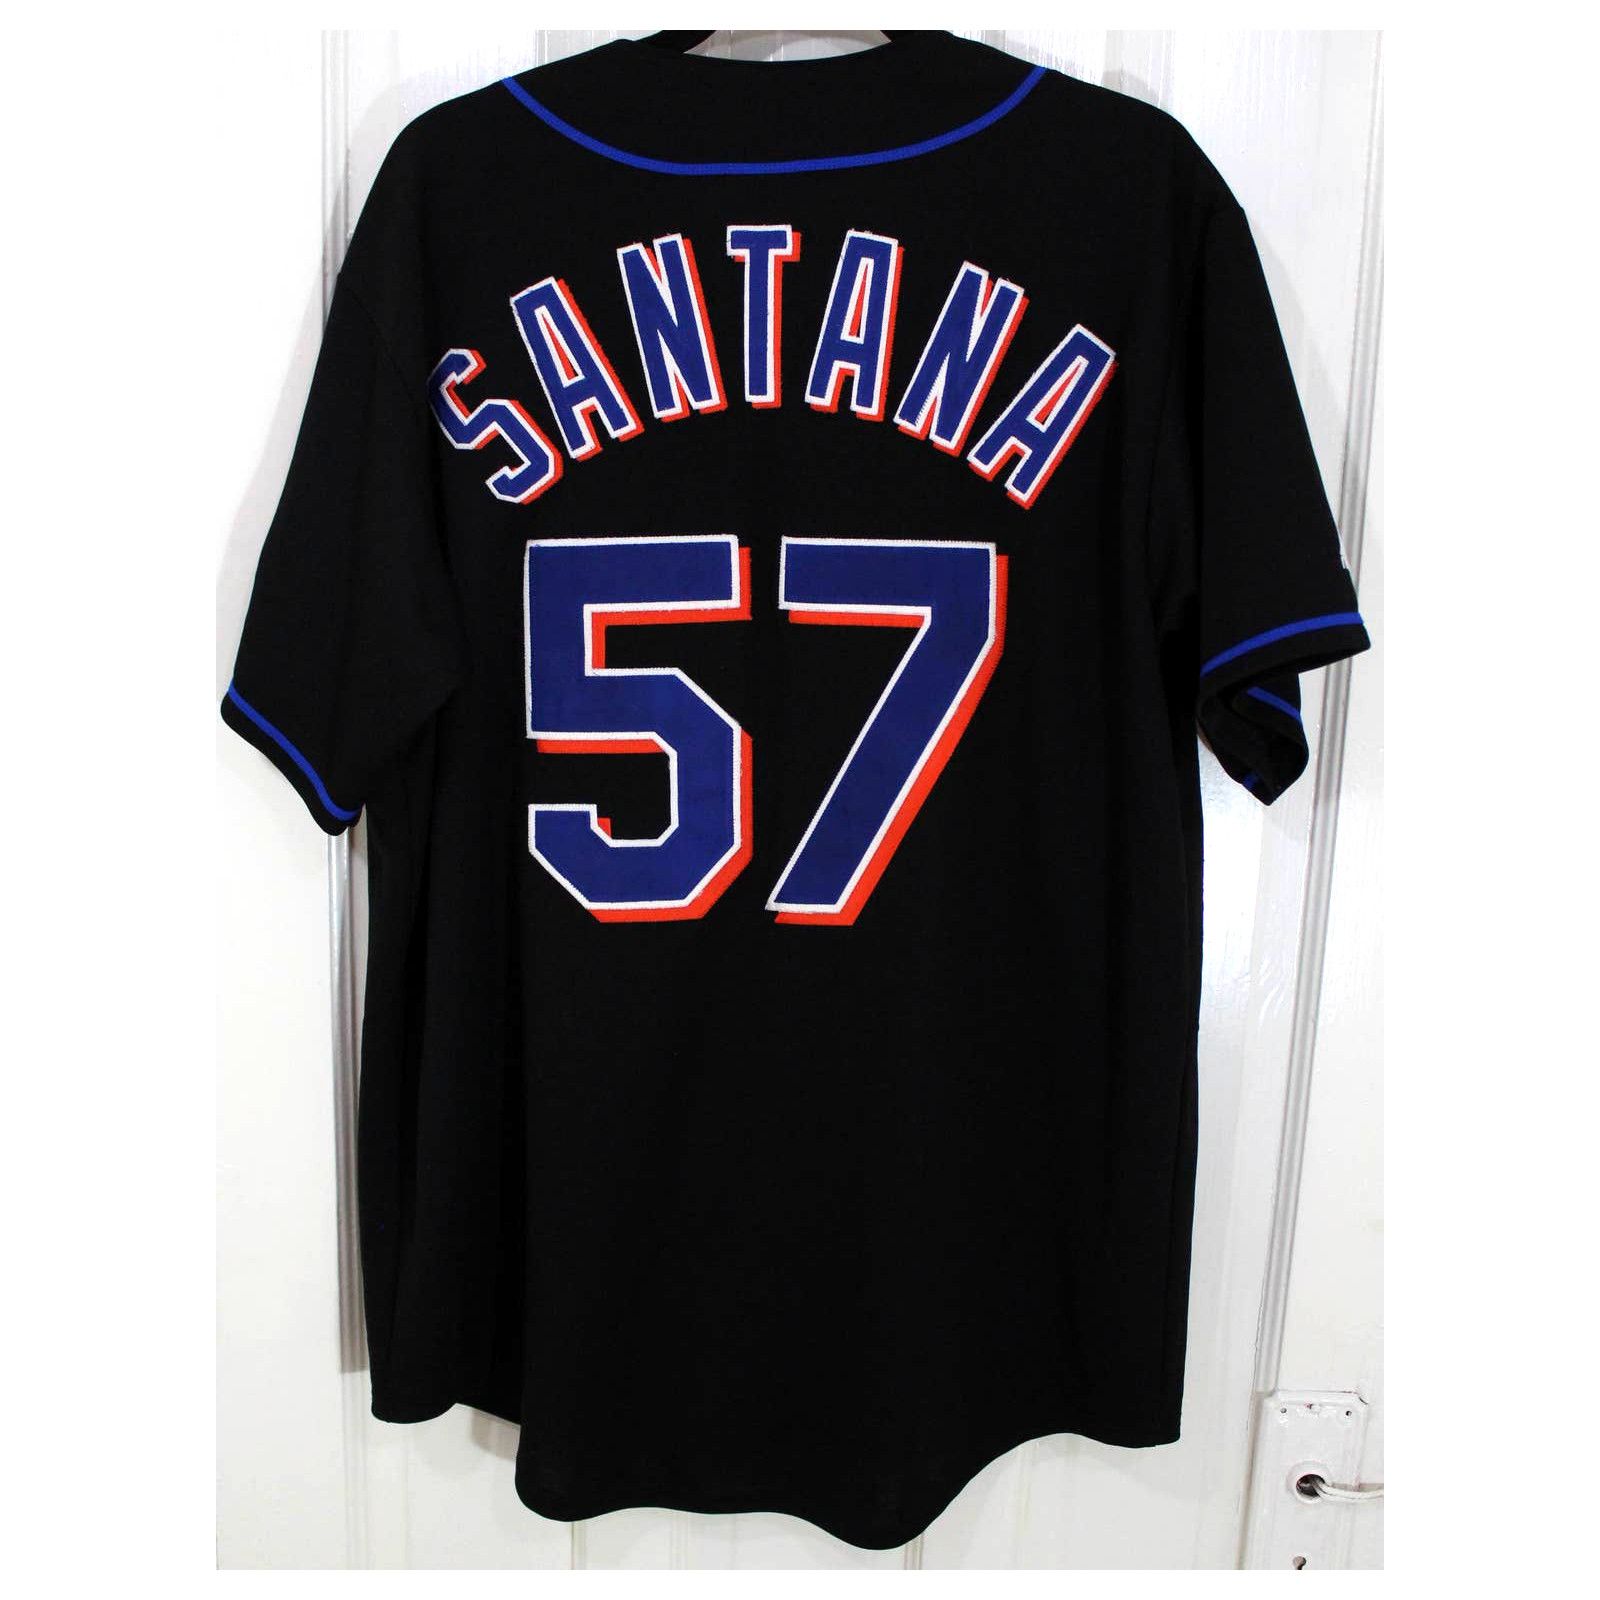 Majestic JOHAN SANTANA 57 New York Mets Jersey 48 NWT 2008 Shea